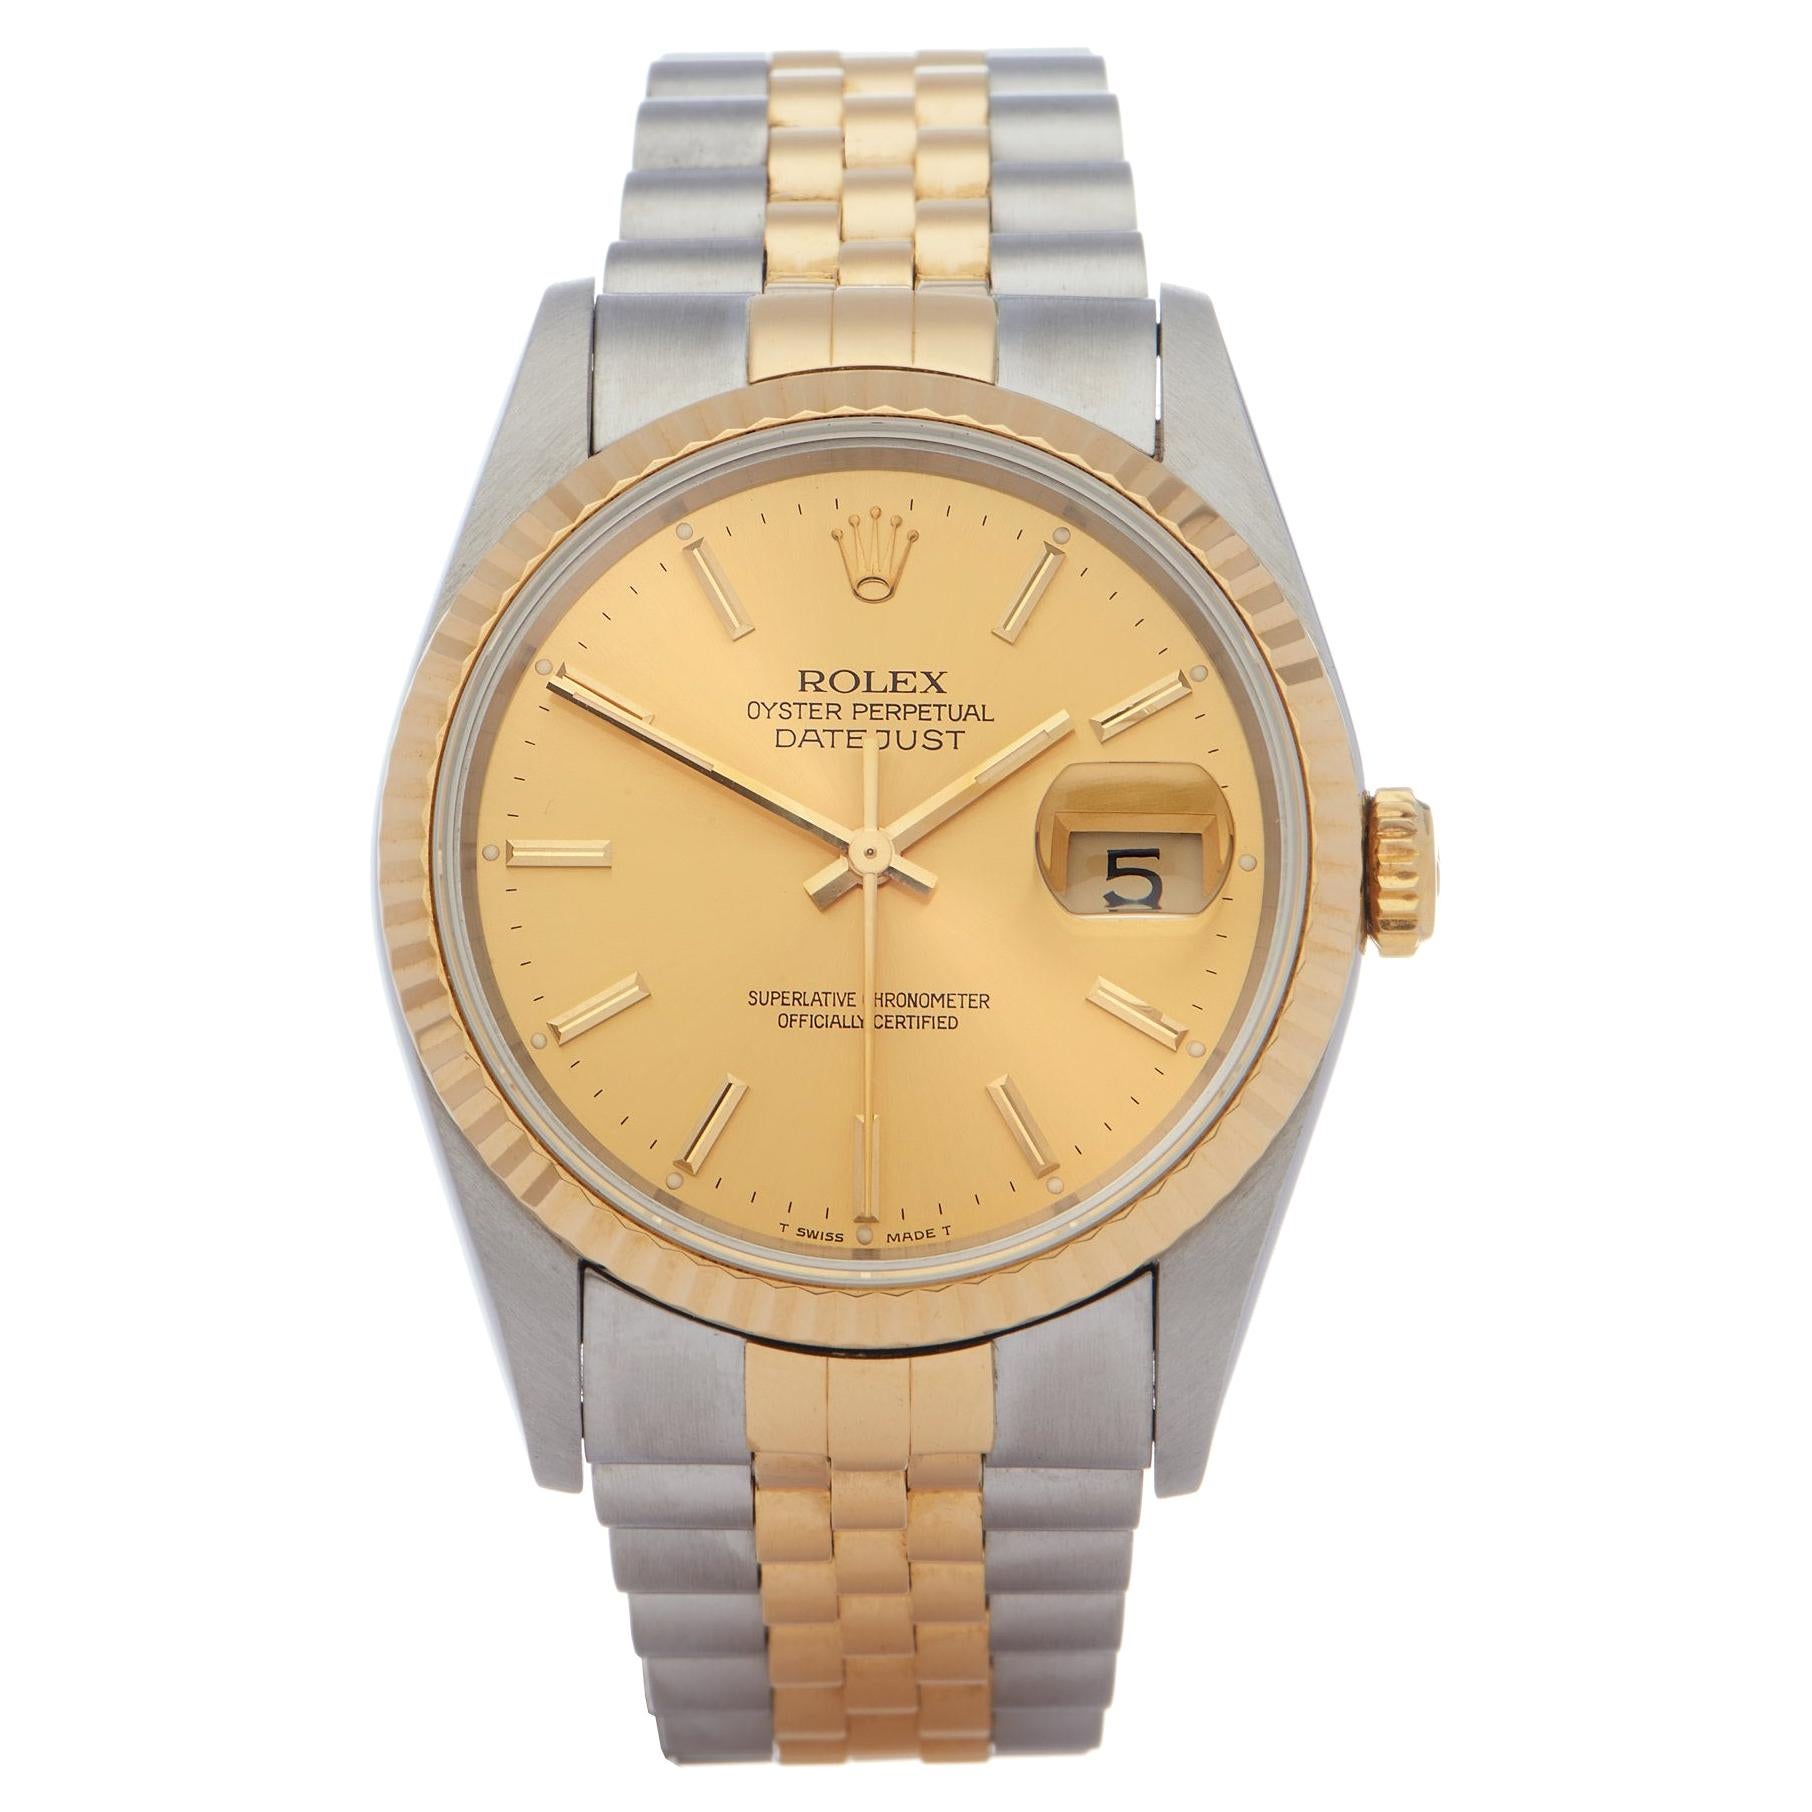 Rolex Datejust 36 16233 Unisex Yellow Gold & Stainless Steel 18K Watch